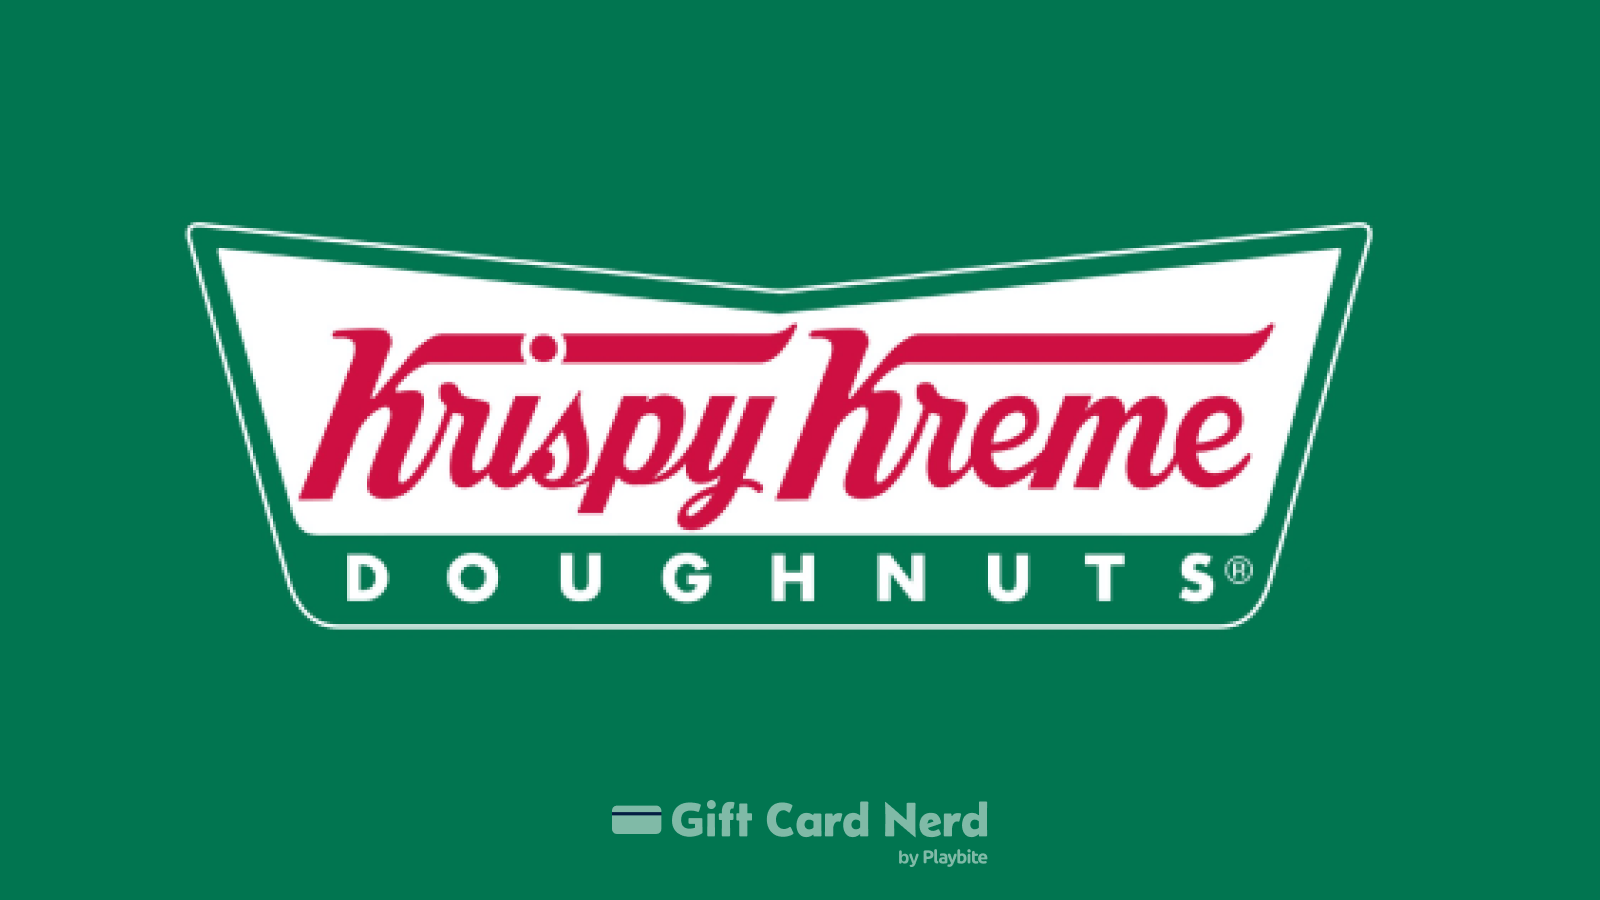 Can I Use a Krispy Kreme Gift Card on Apple Wallet?